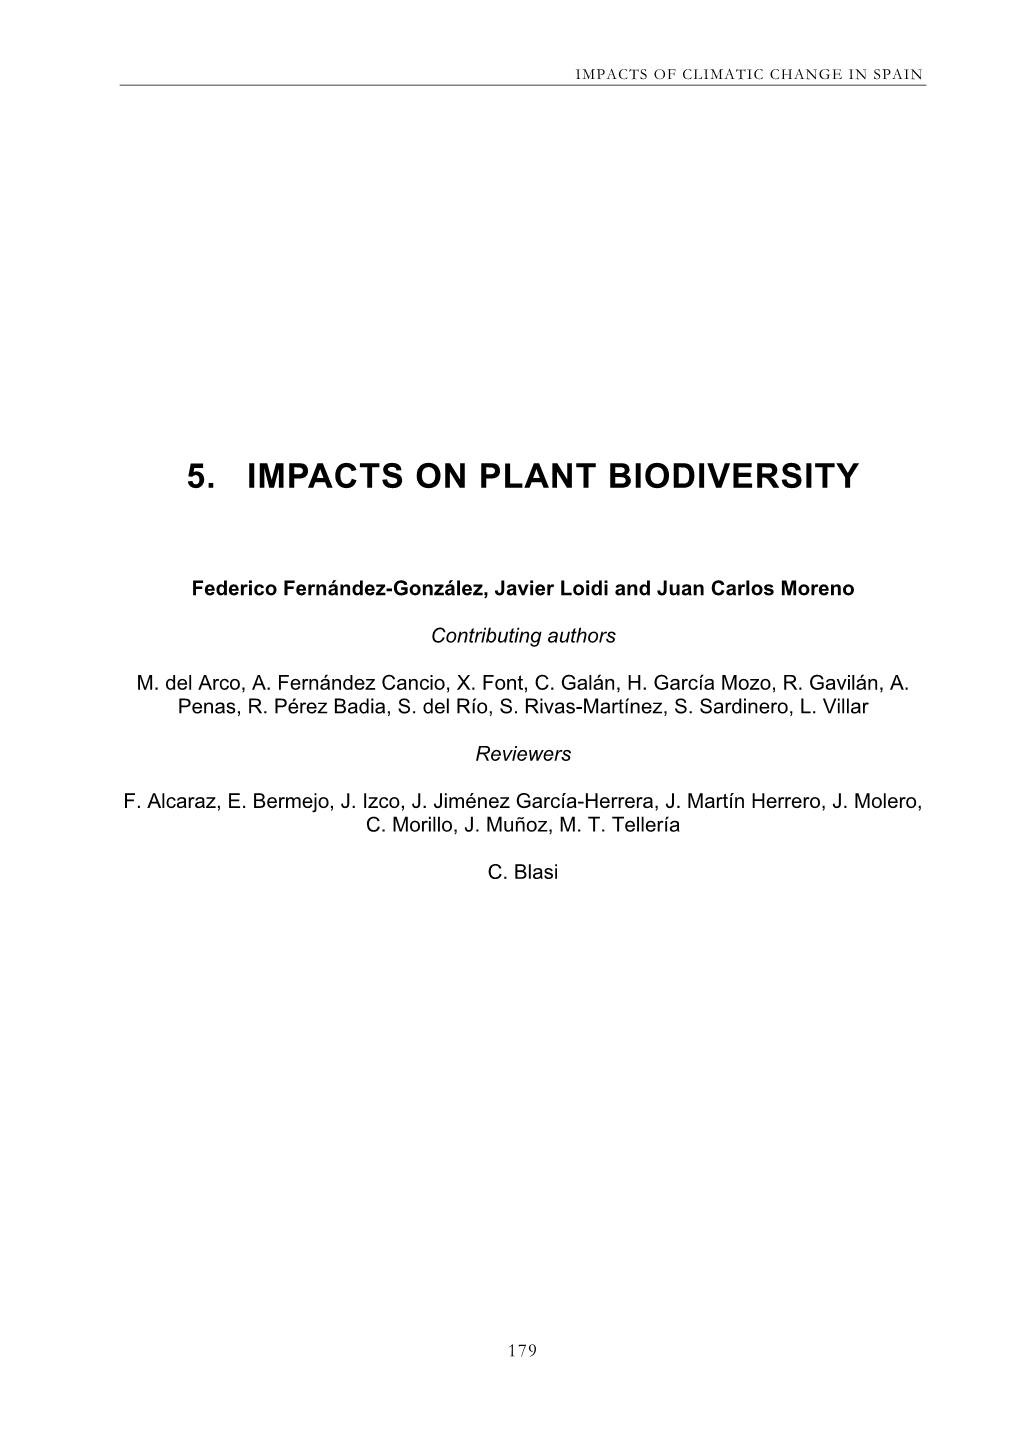 5. Impacts on Plant Biodiversity